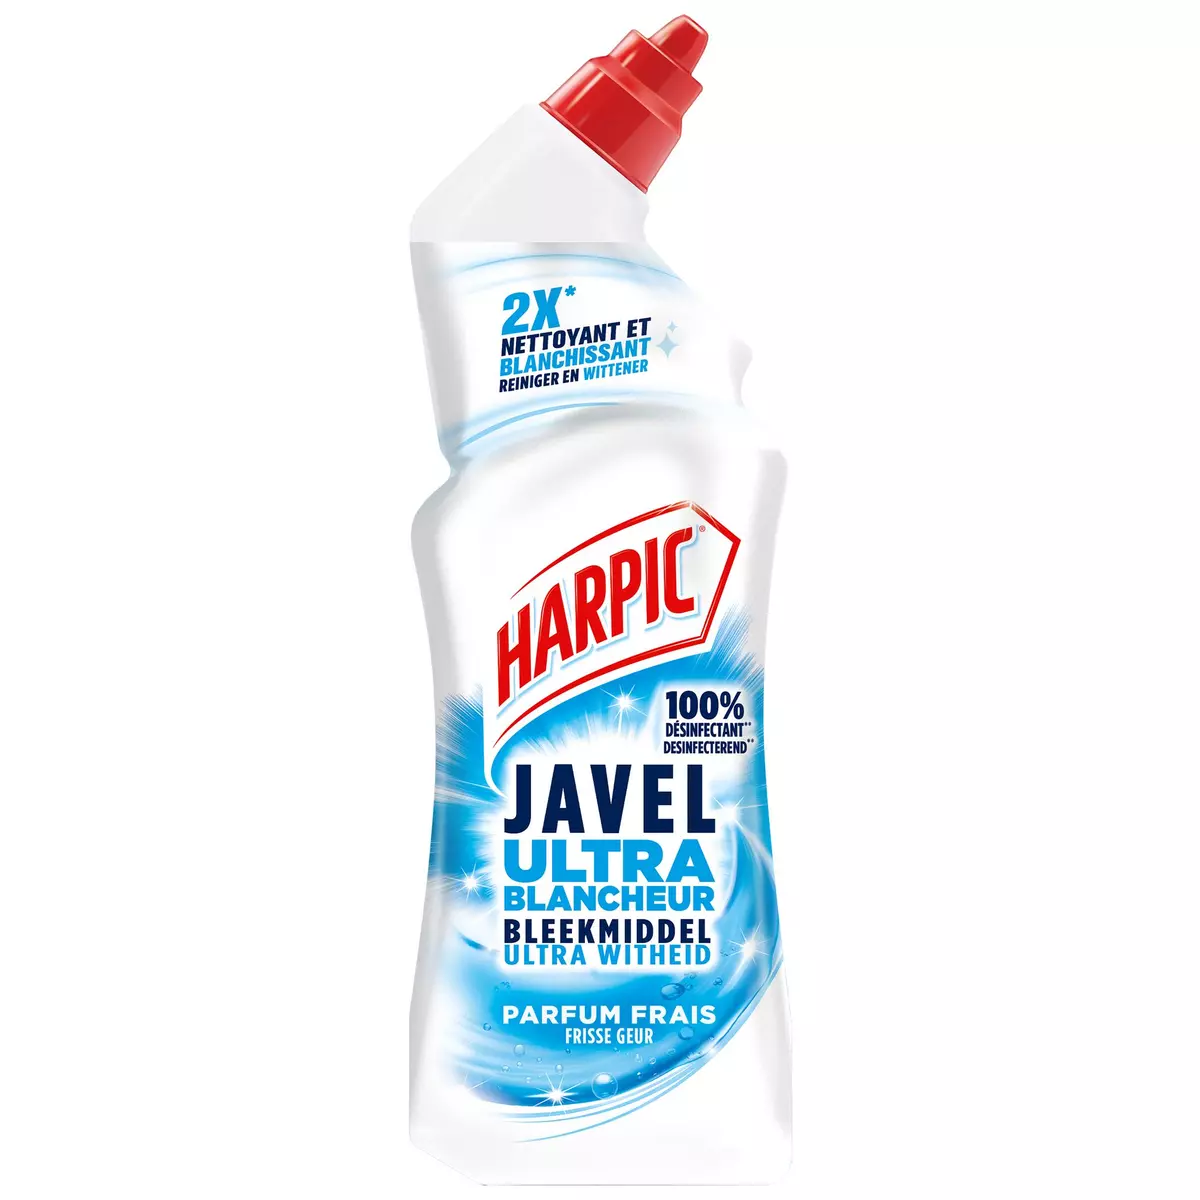 HARPIC Gel javel ultra blancheur parfum frais 750ml